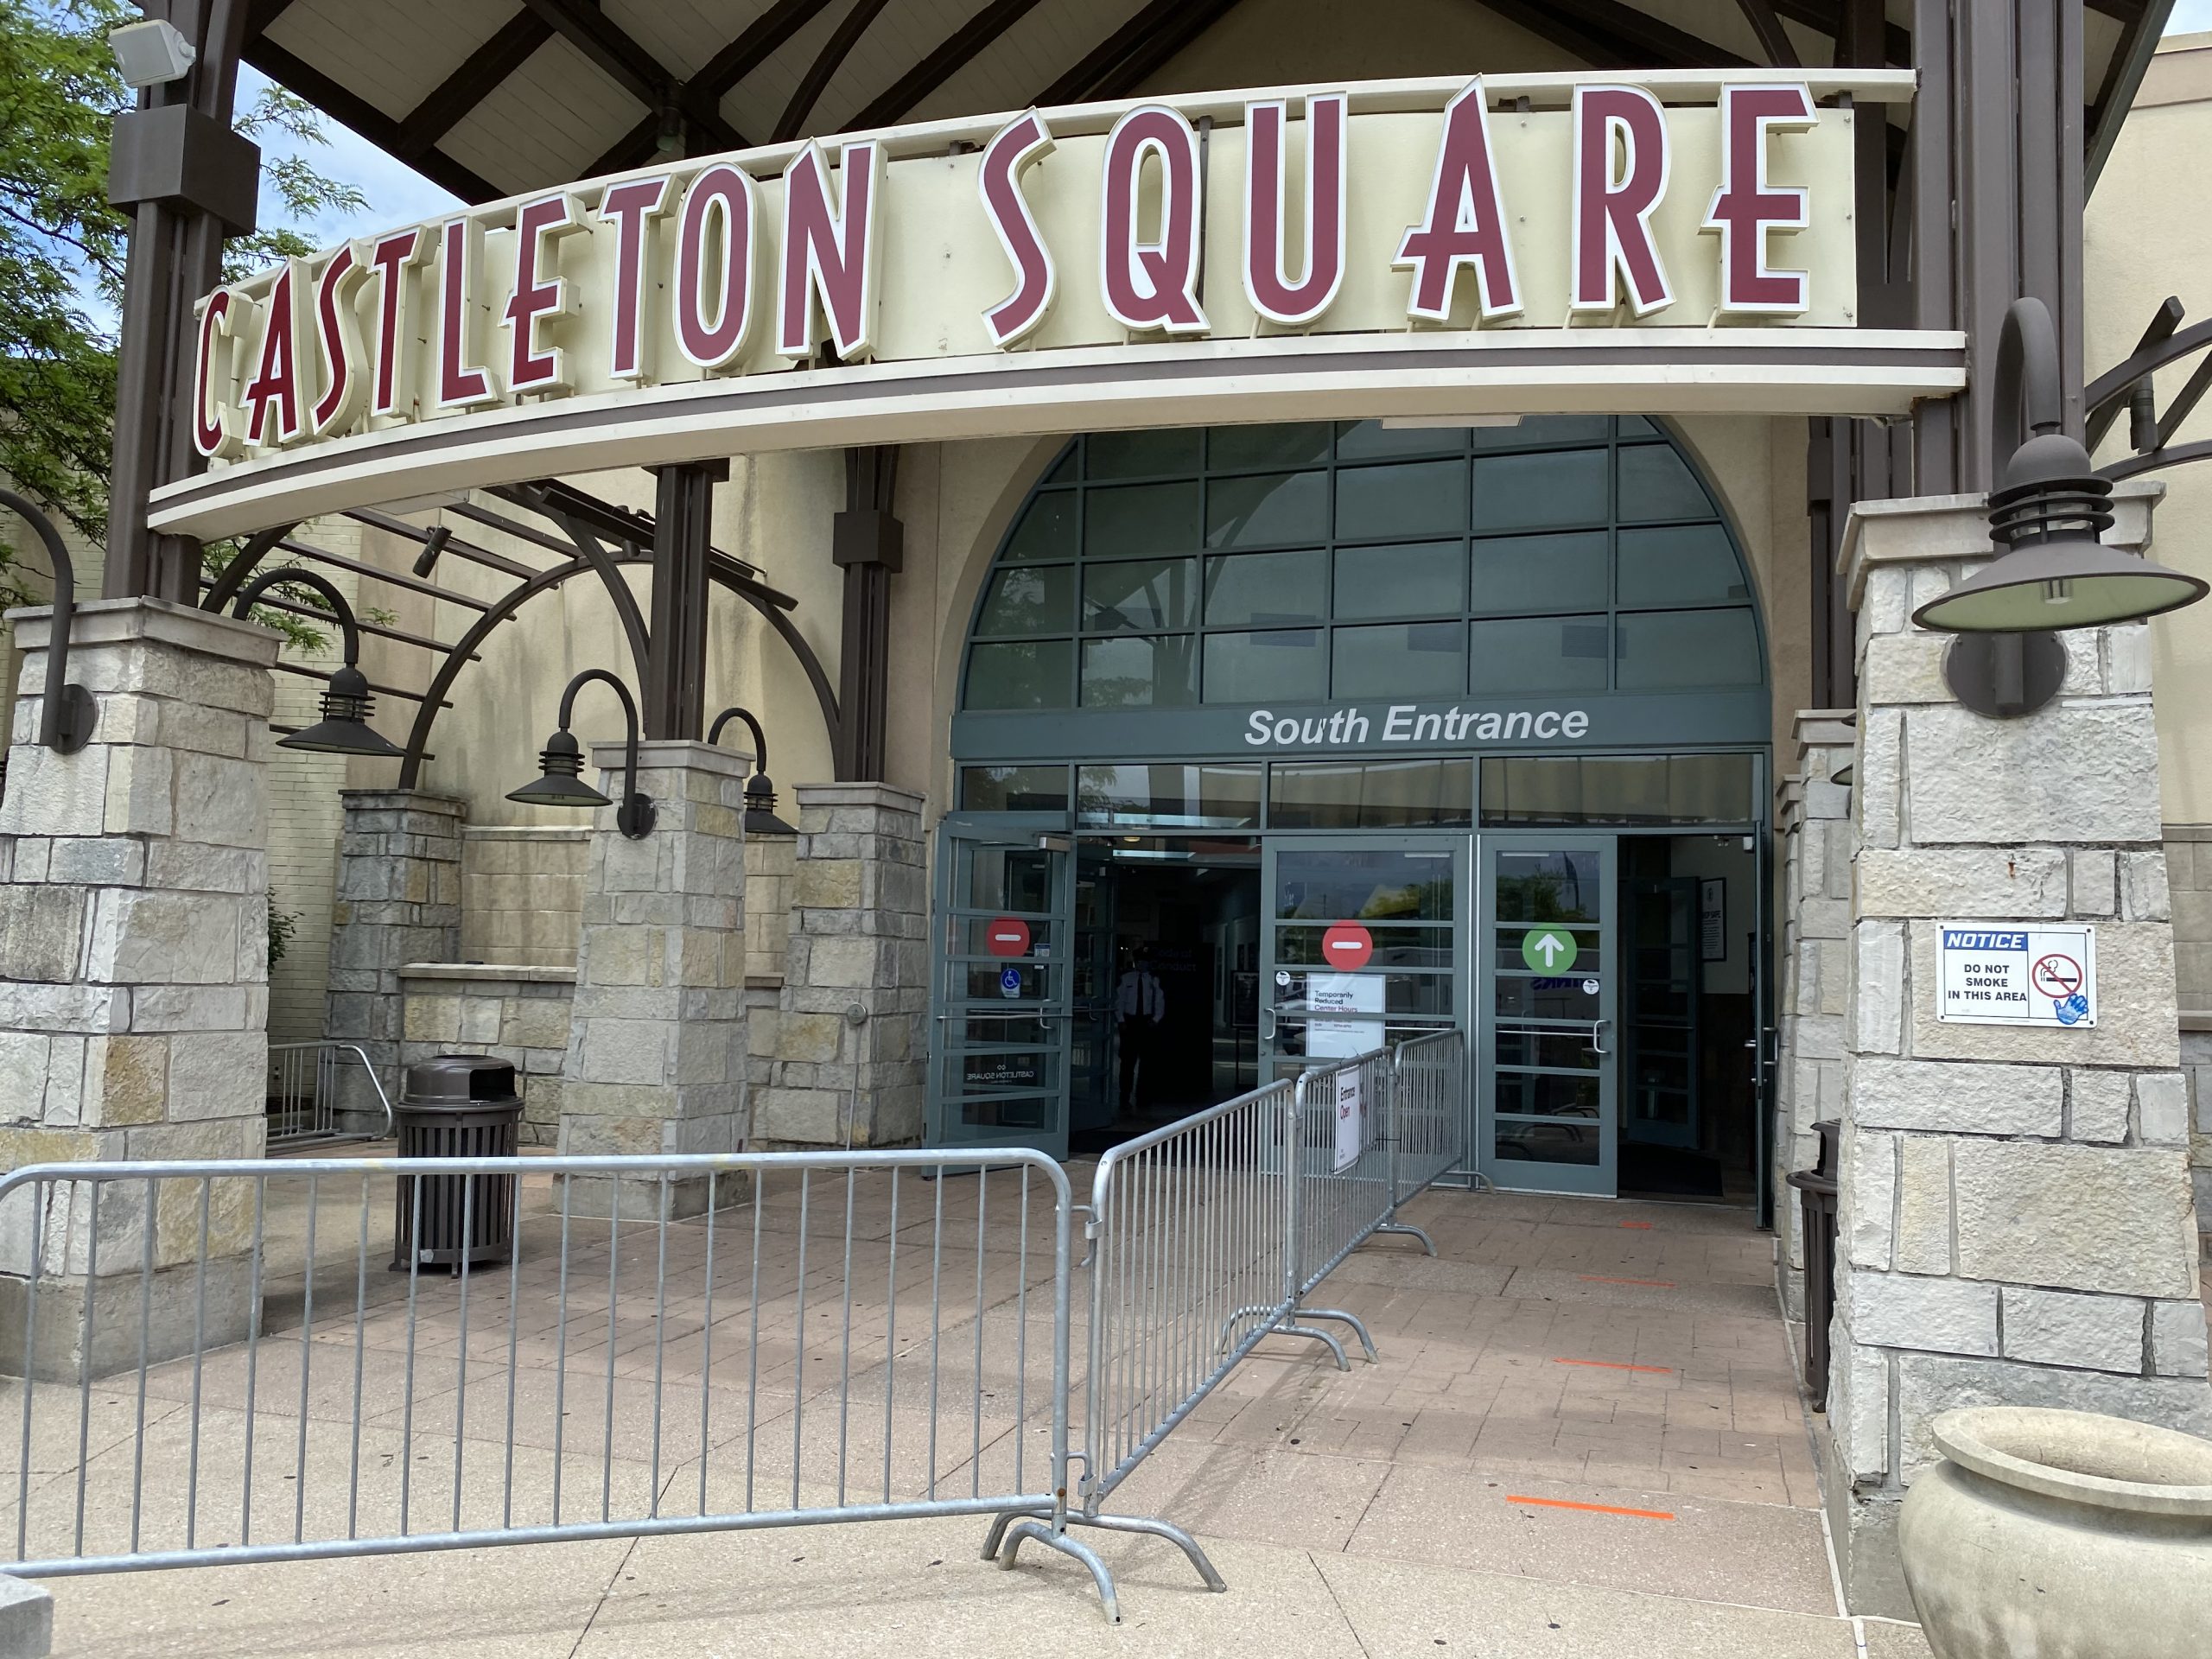 Castleton Square Mall - North-side